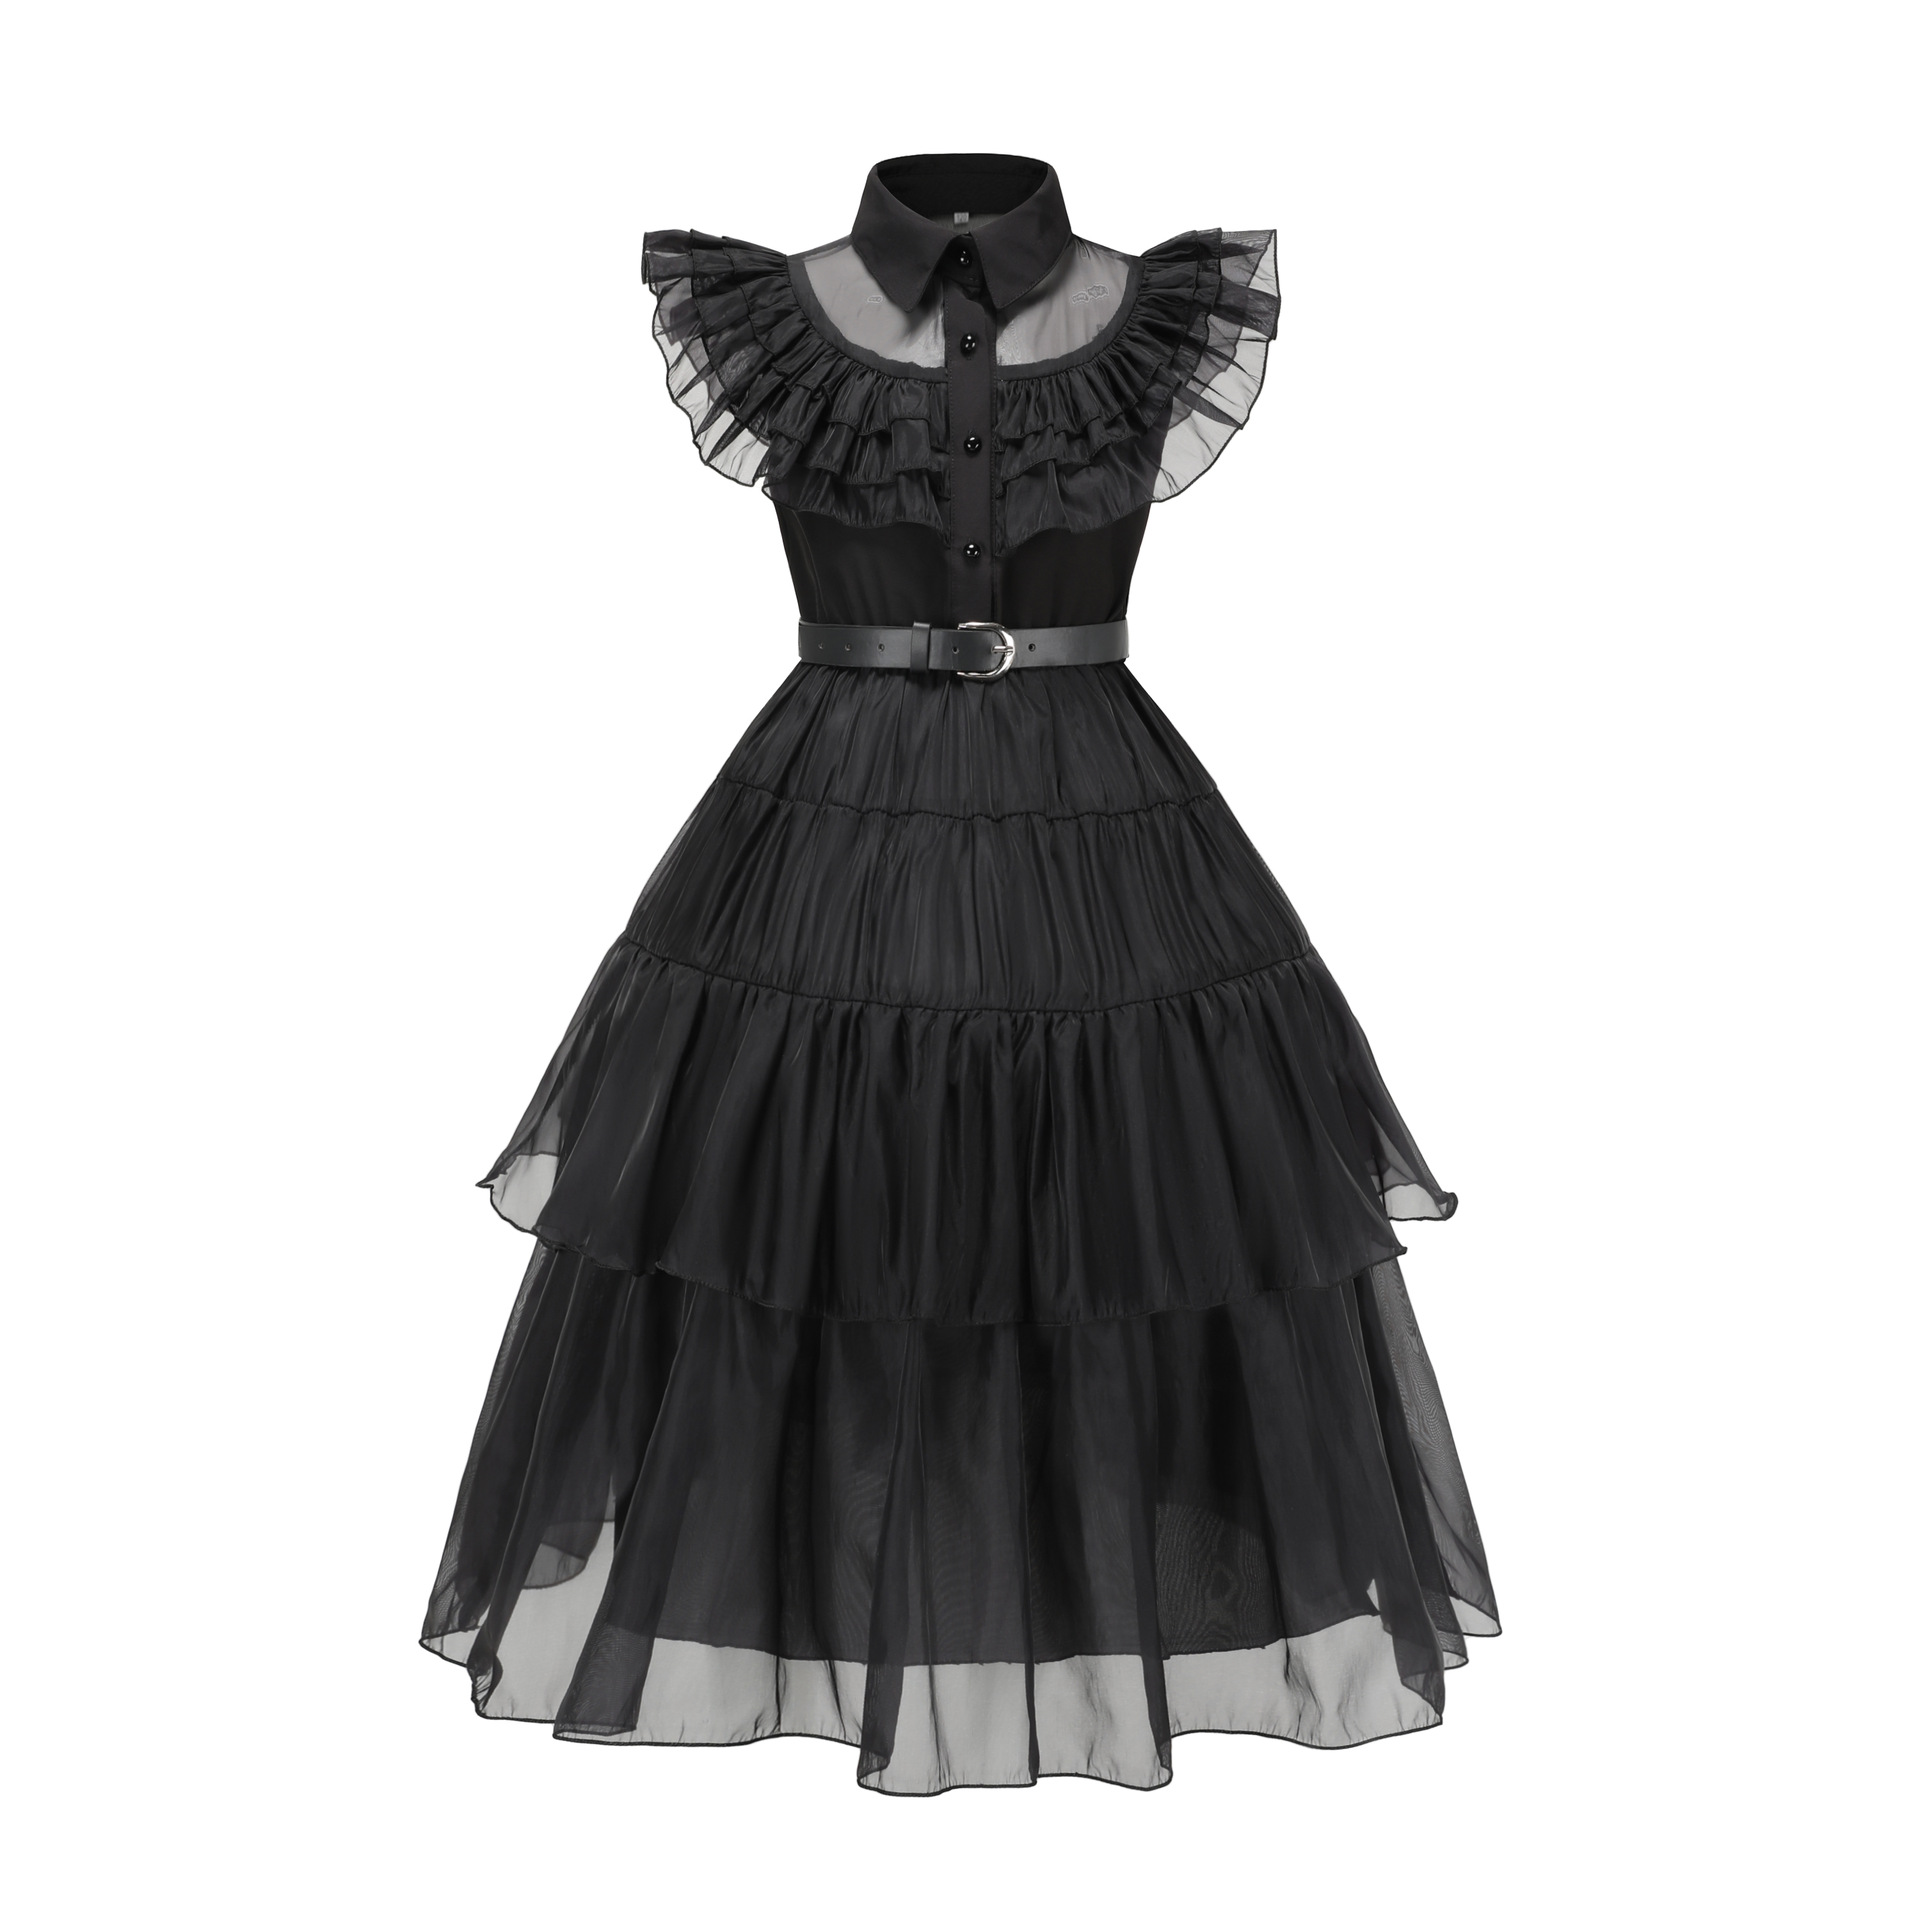 Chic Wednesday's Addams-Inspired Girls' Tutu Dress - Elegant Mesh Cosplay Frock